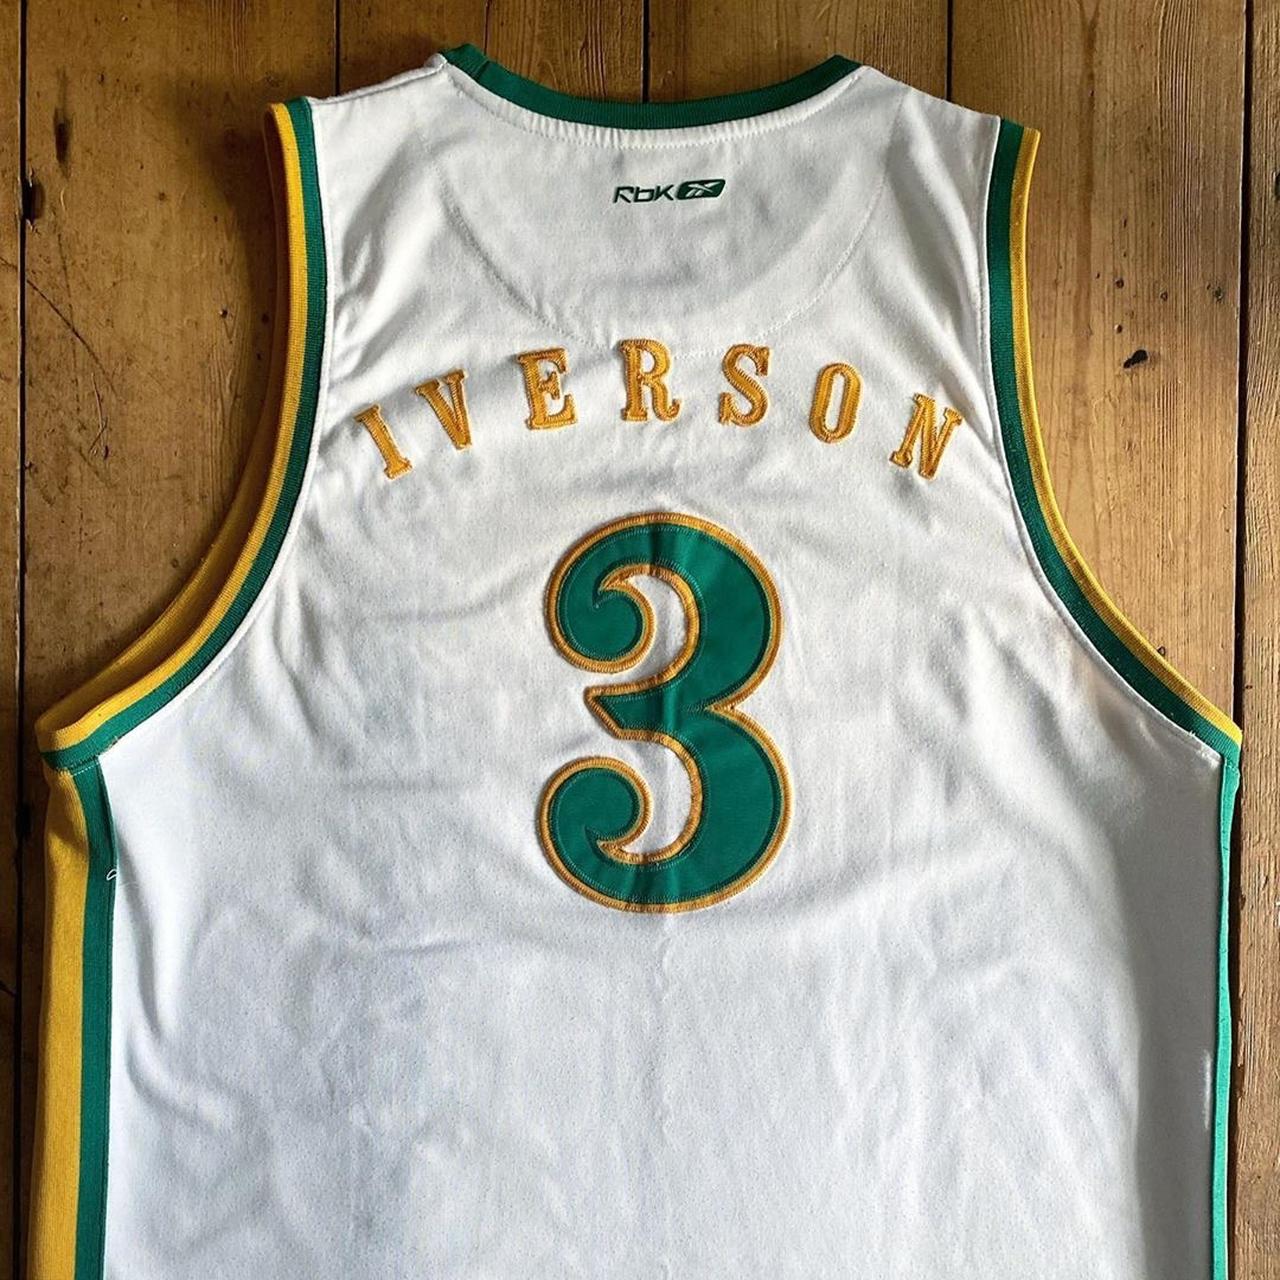 Reebok Allen Iverson Answer 7 Basketball Trainers - Depop